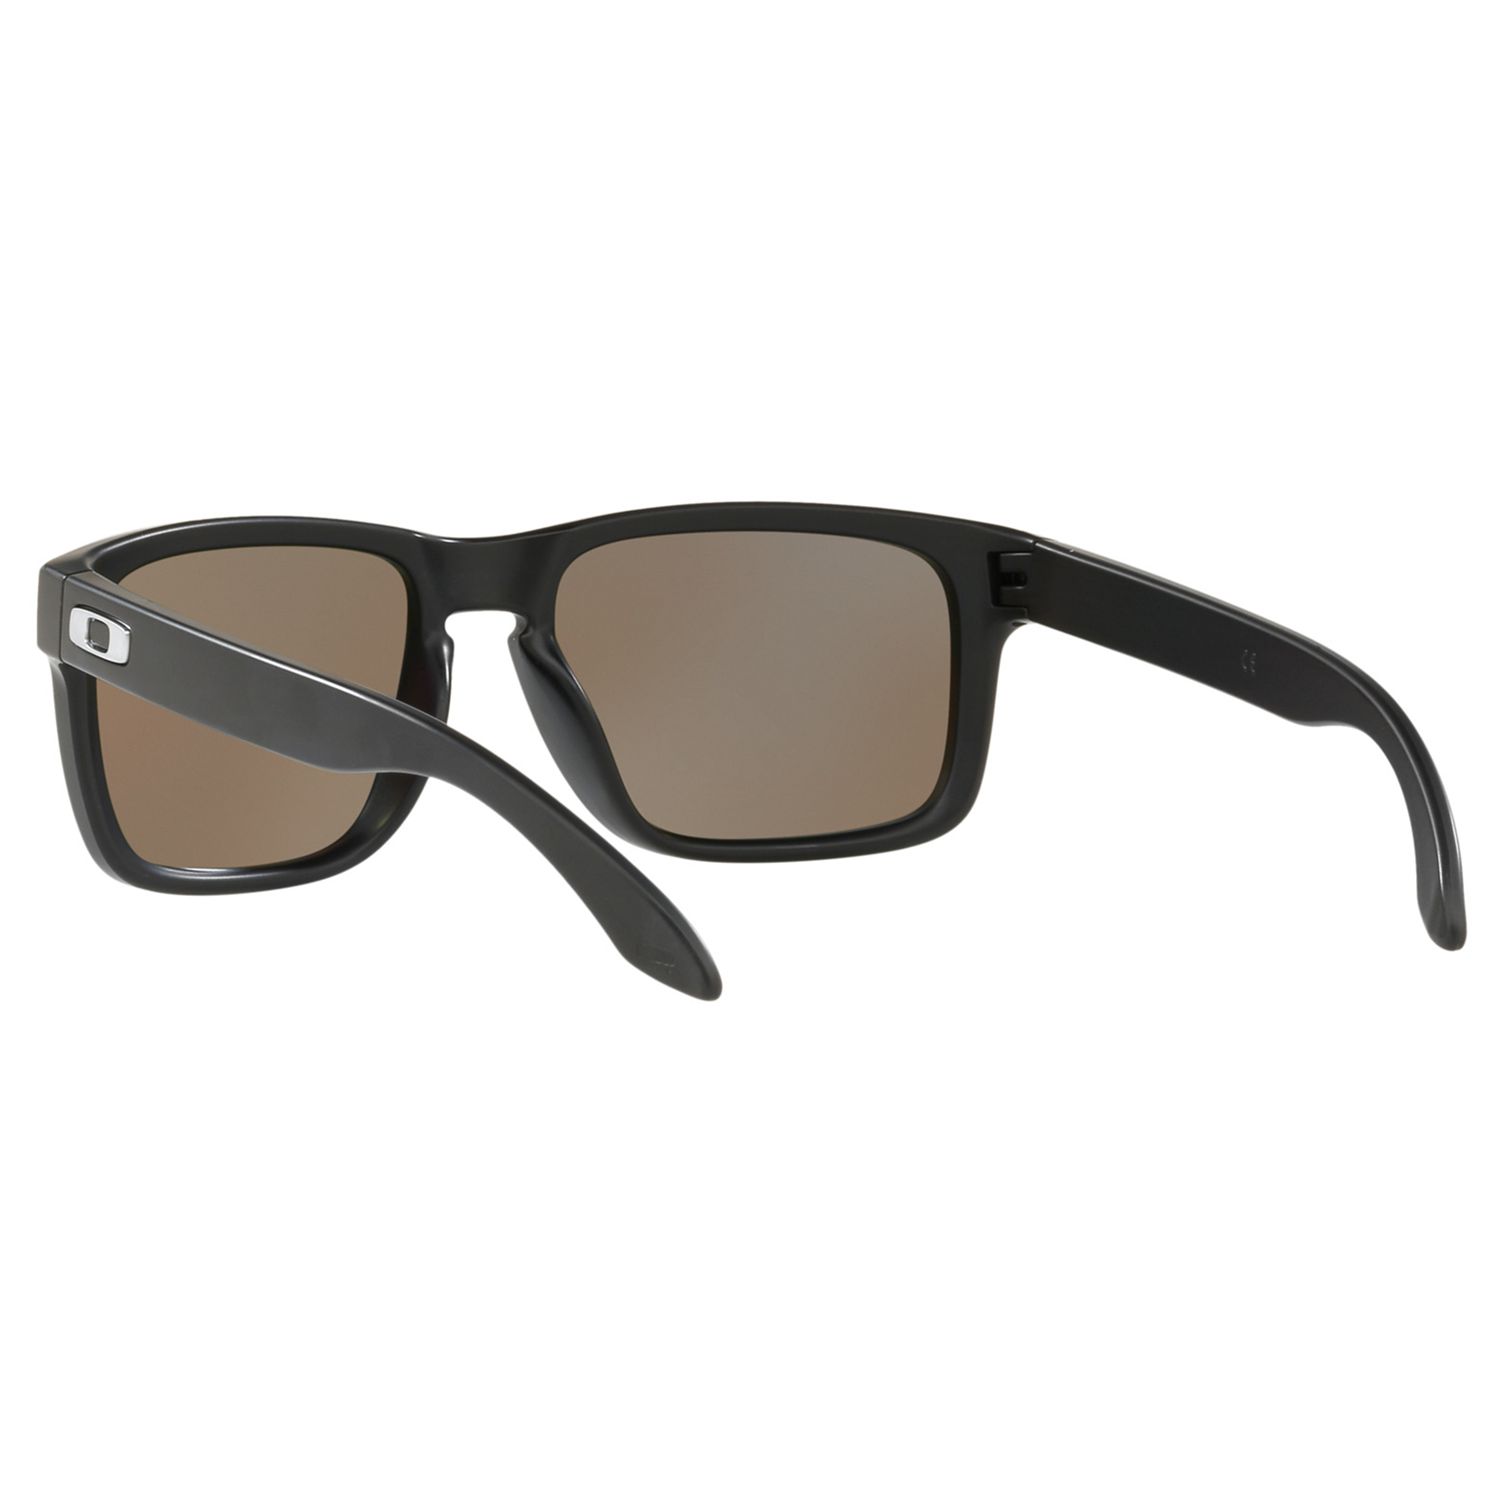 Sunglasses OAKLEY Holbrook XL OO9102-T455 2021